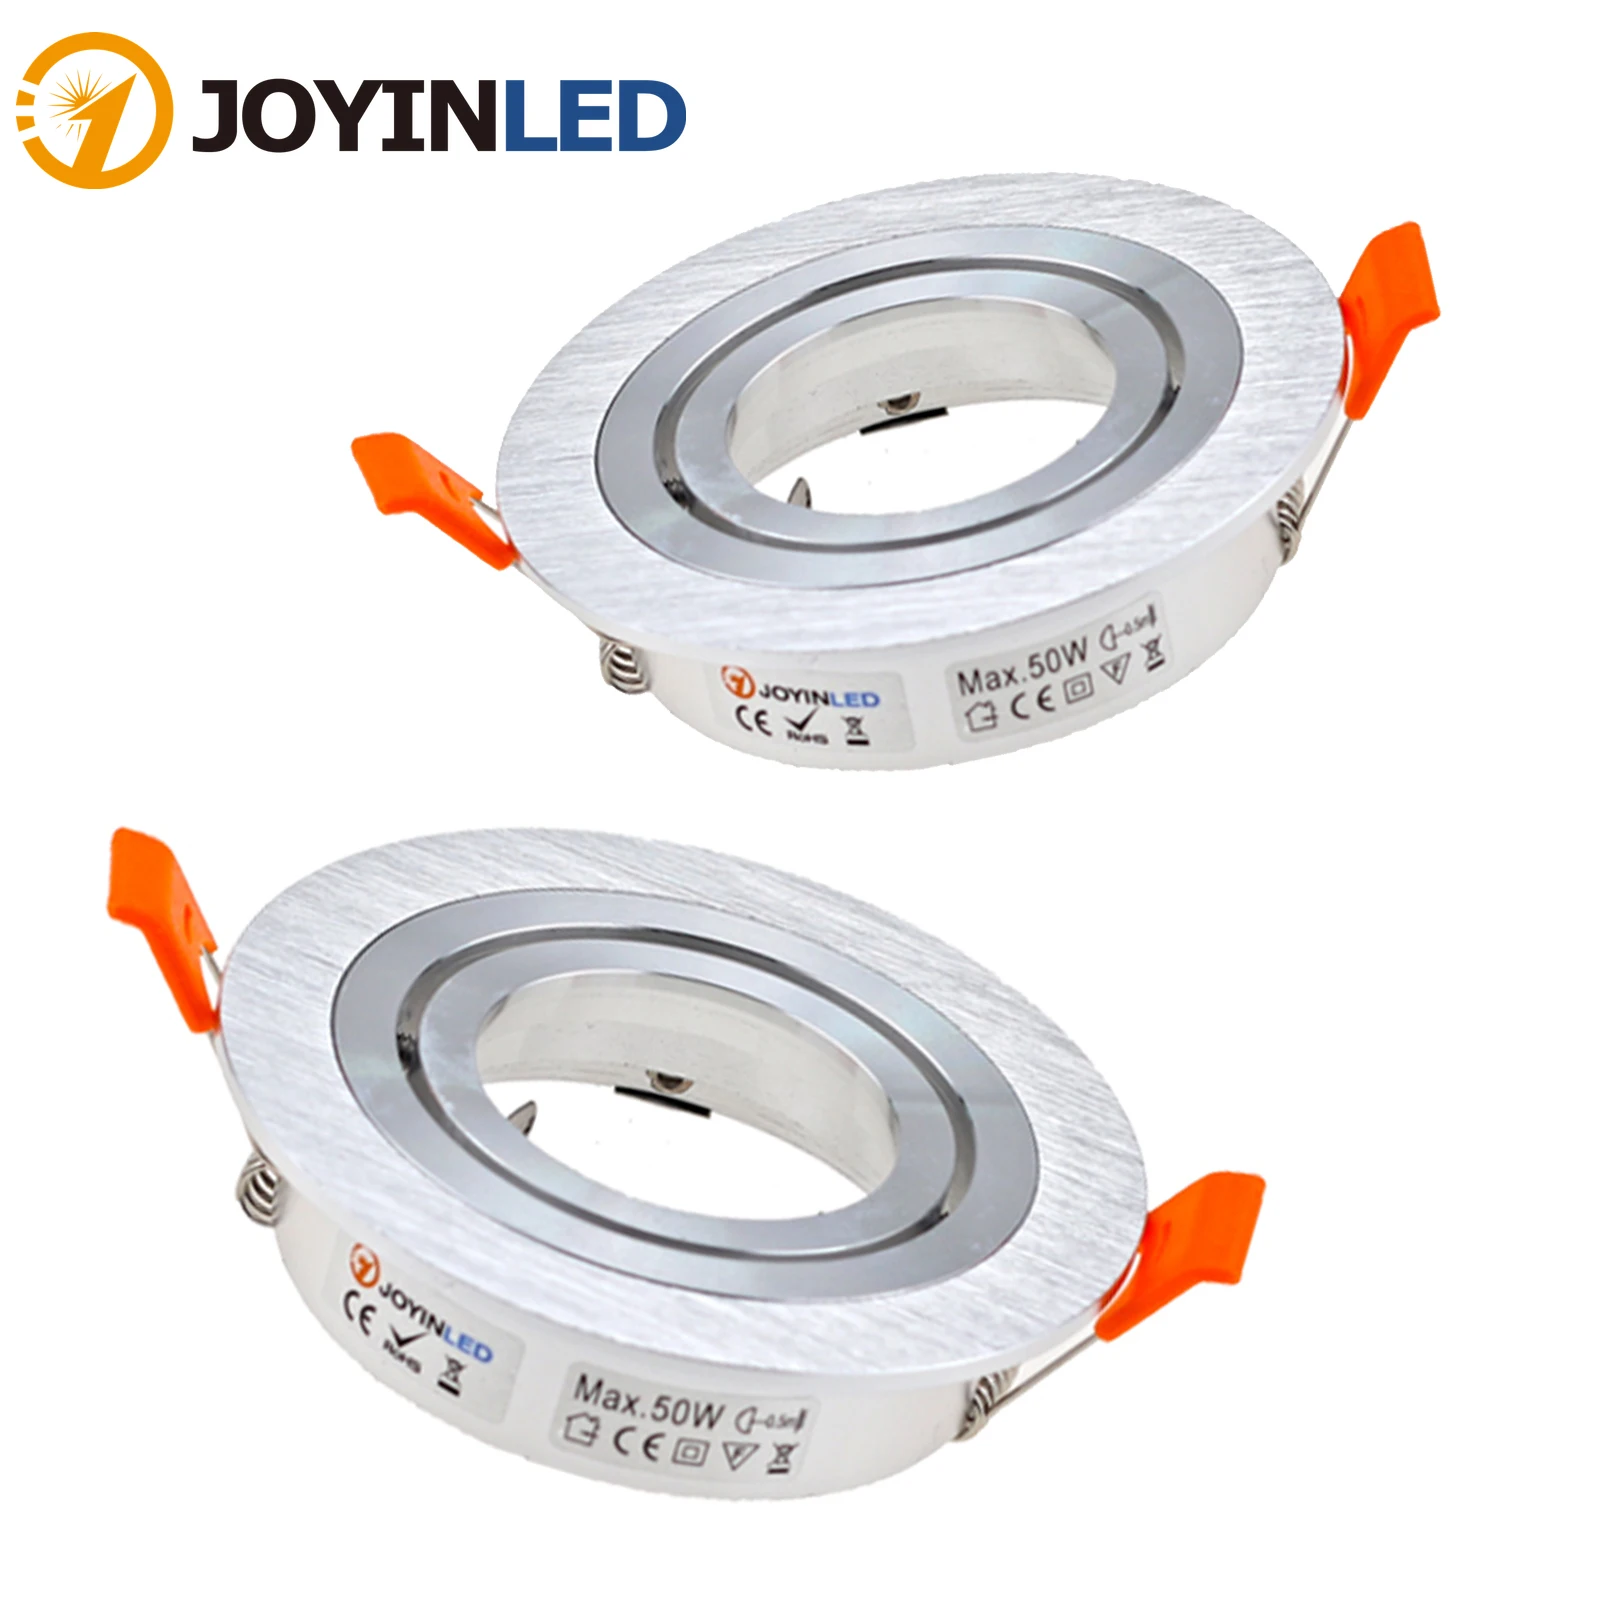 

Round Recessed LED Ceiling Light Spotlight Fixture GU10 MR16 Fitting Mounting Ceiling Spot Lights Frame Lamp Socket Holder